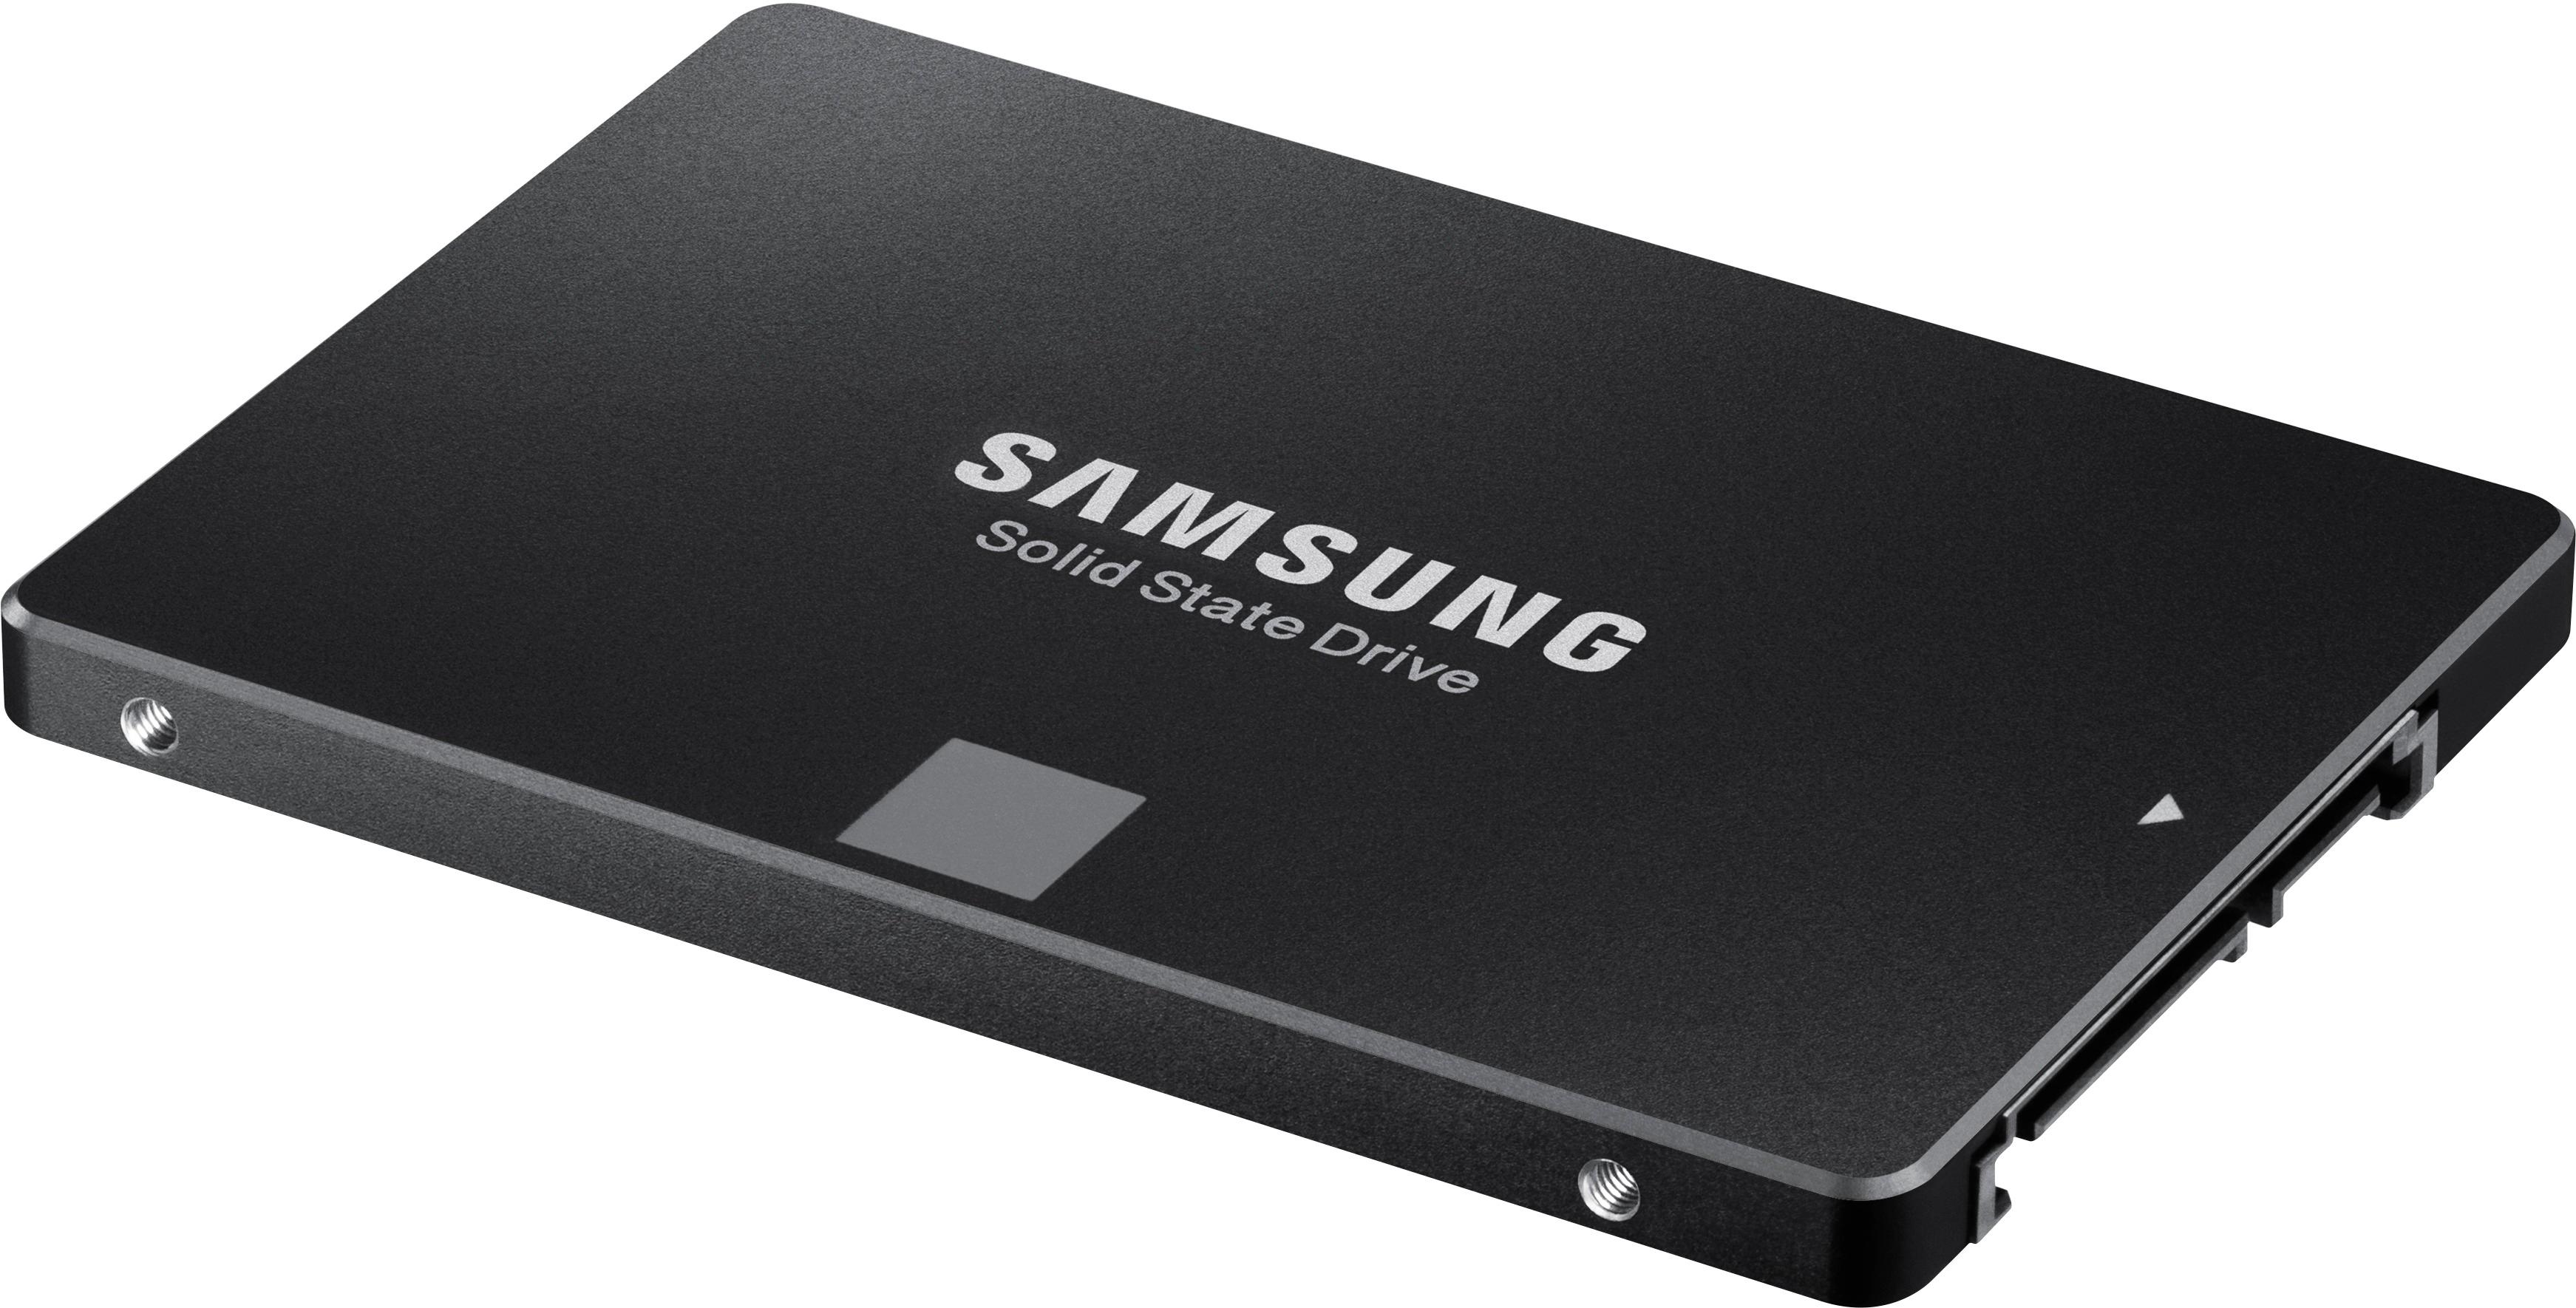 Samsung 860 EVO 250GB 2.5' SATA III SSD Internal Solid State Drive MZ-76E250B/AM 